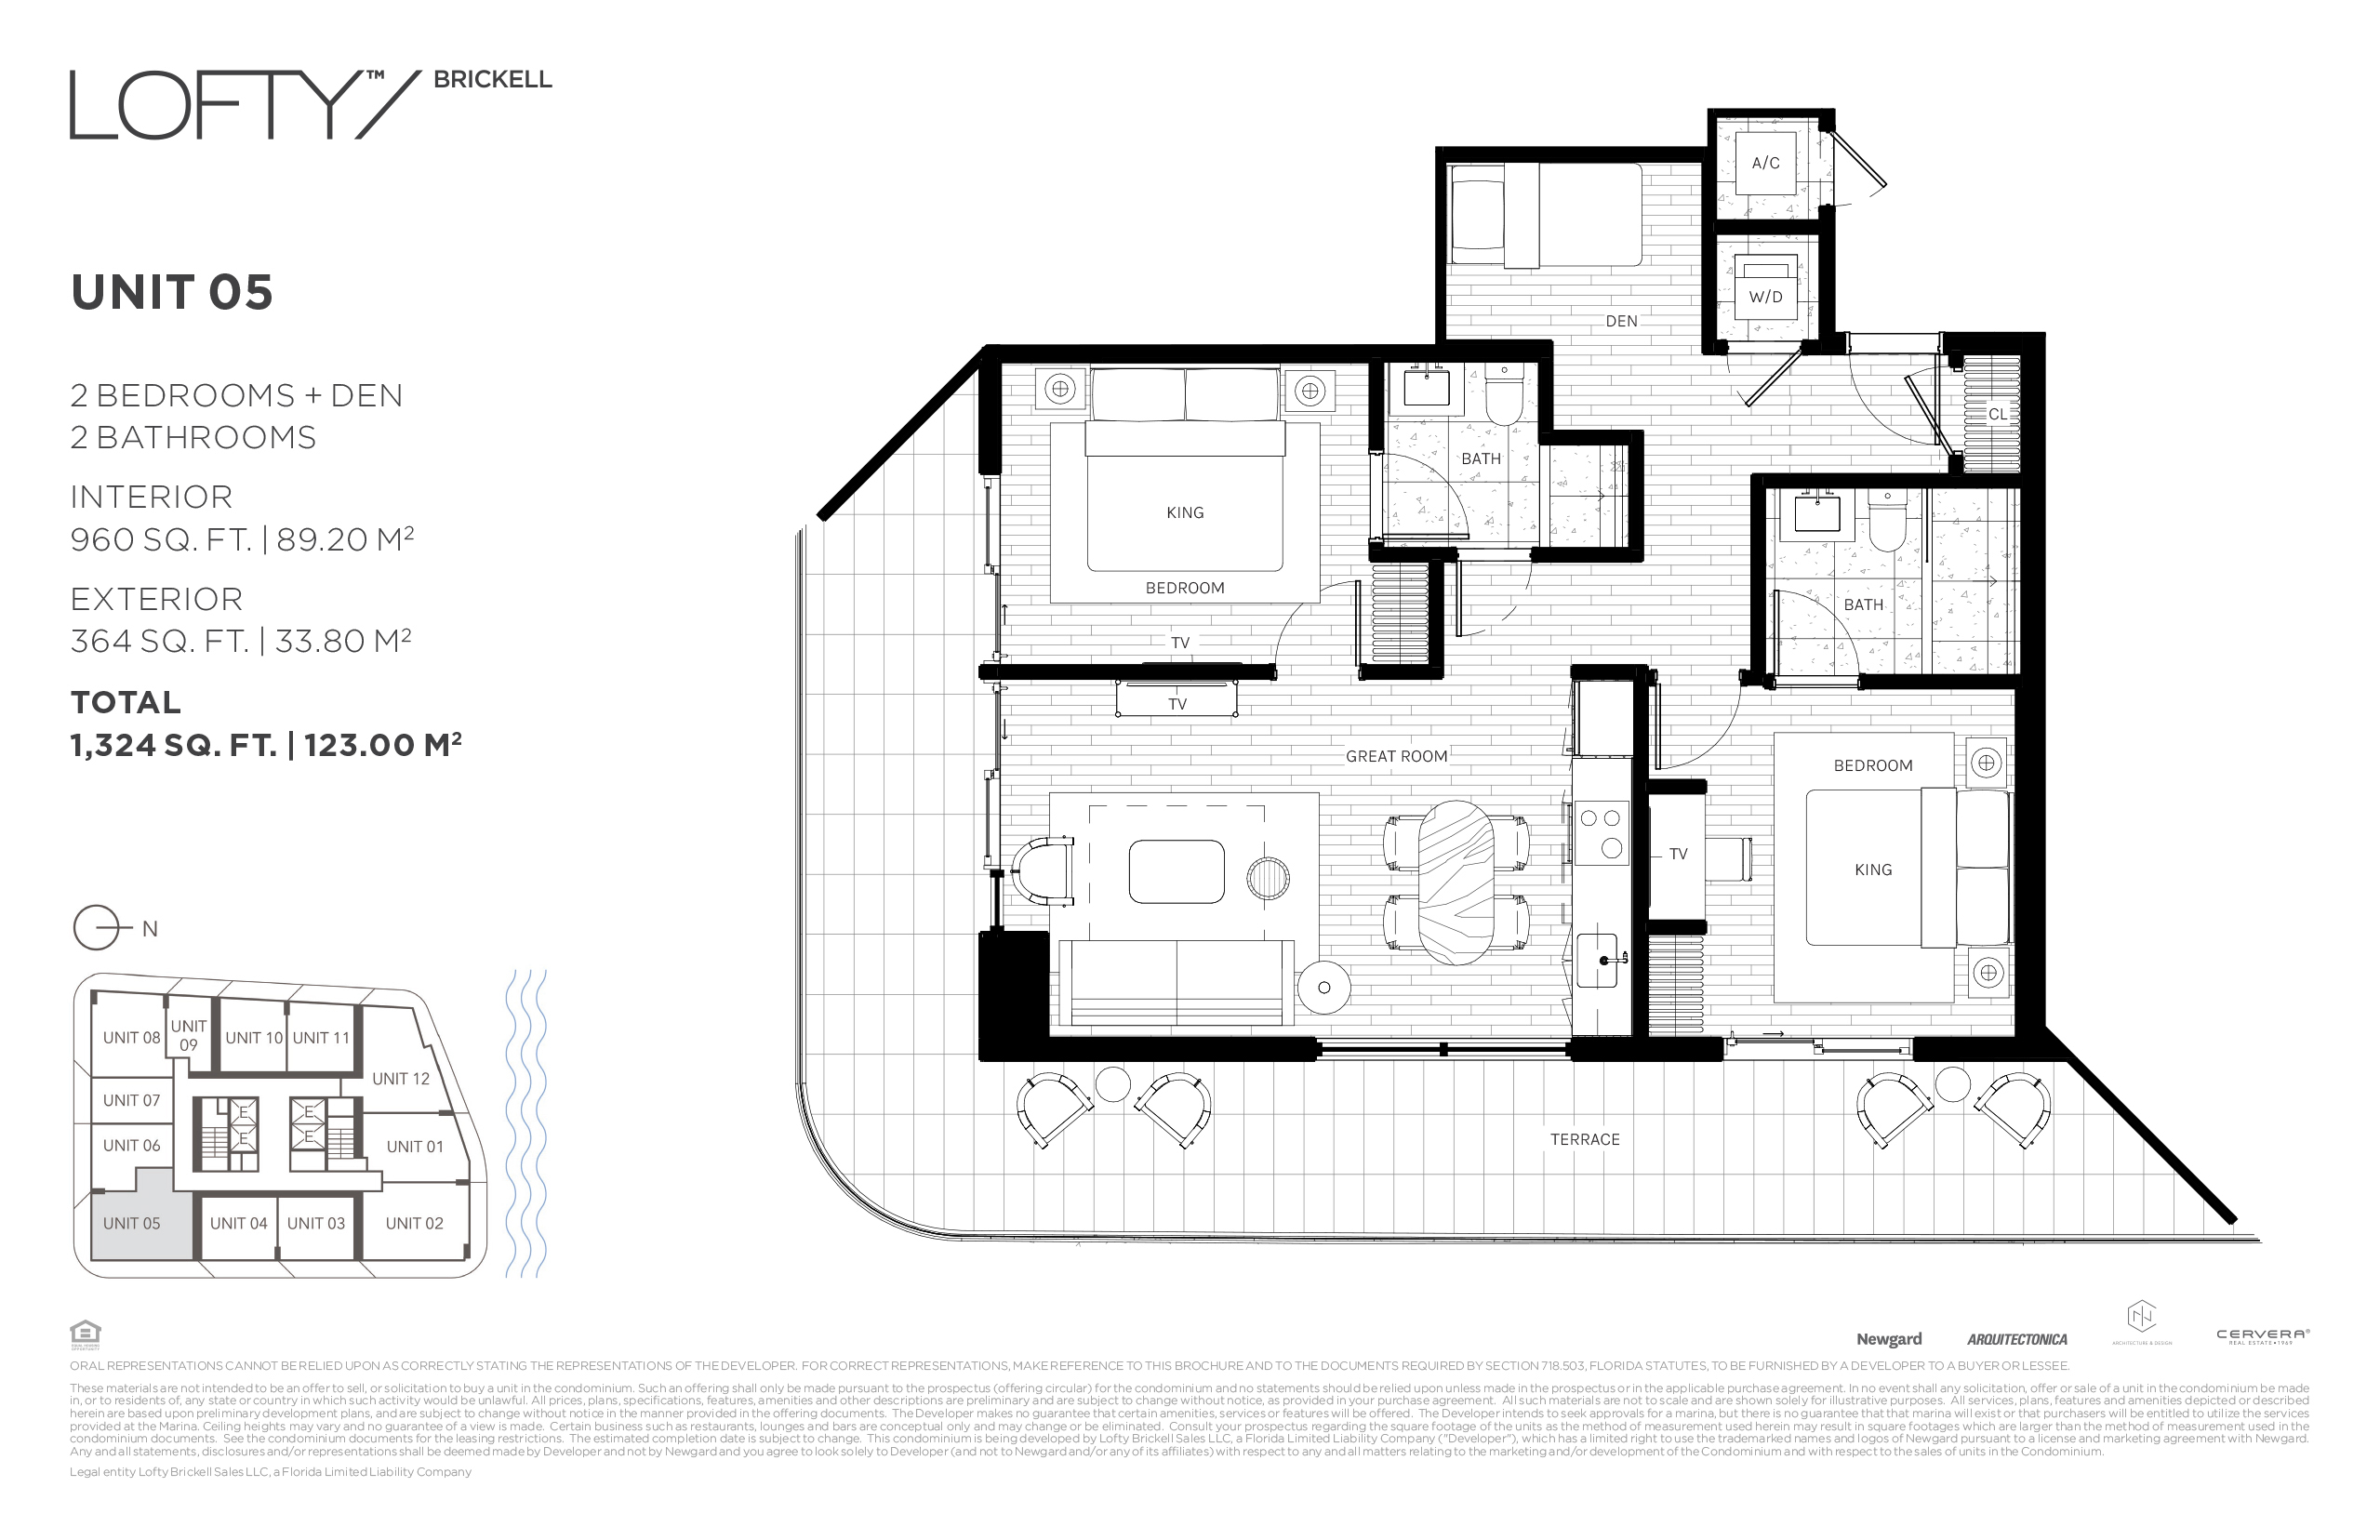 Floor Plan for Lofty Brickell Floorplans, Unit 05